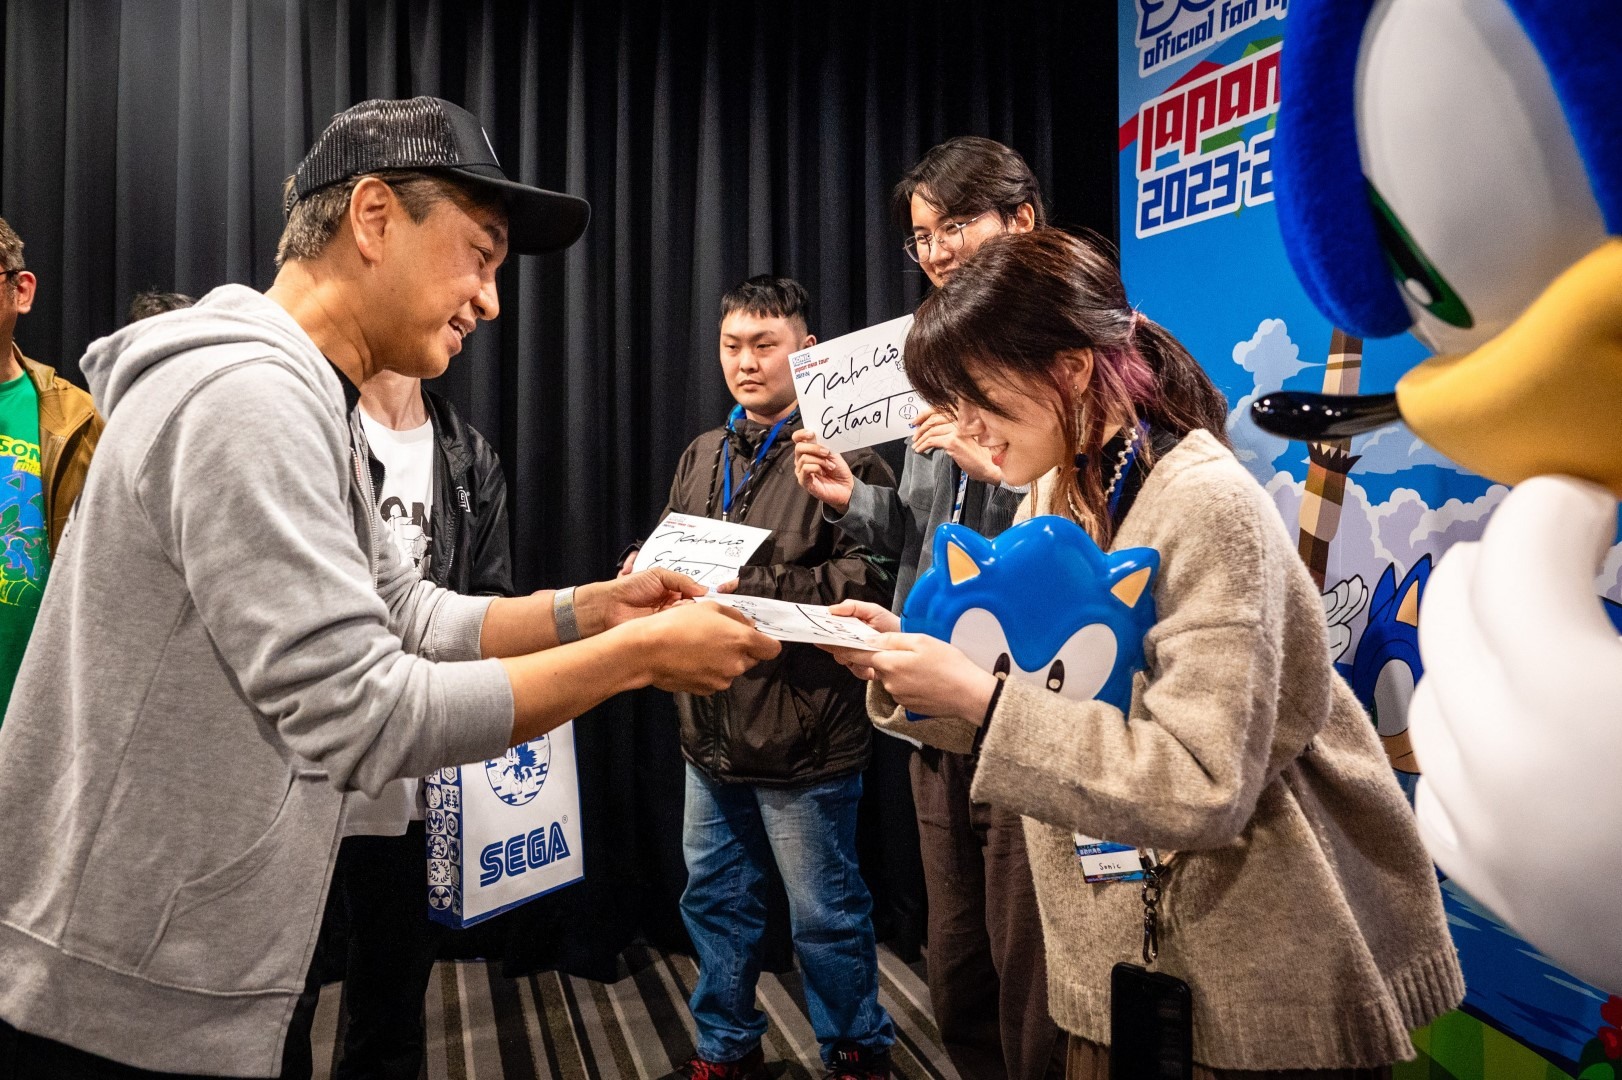 2024 Sonic official fan meeting in Taipei 活动回顾 中村俊制作人献上惊喜影片